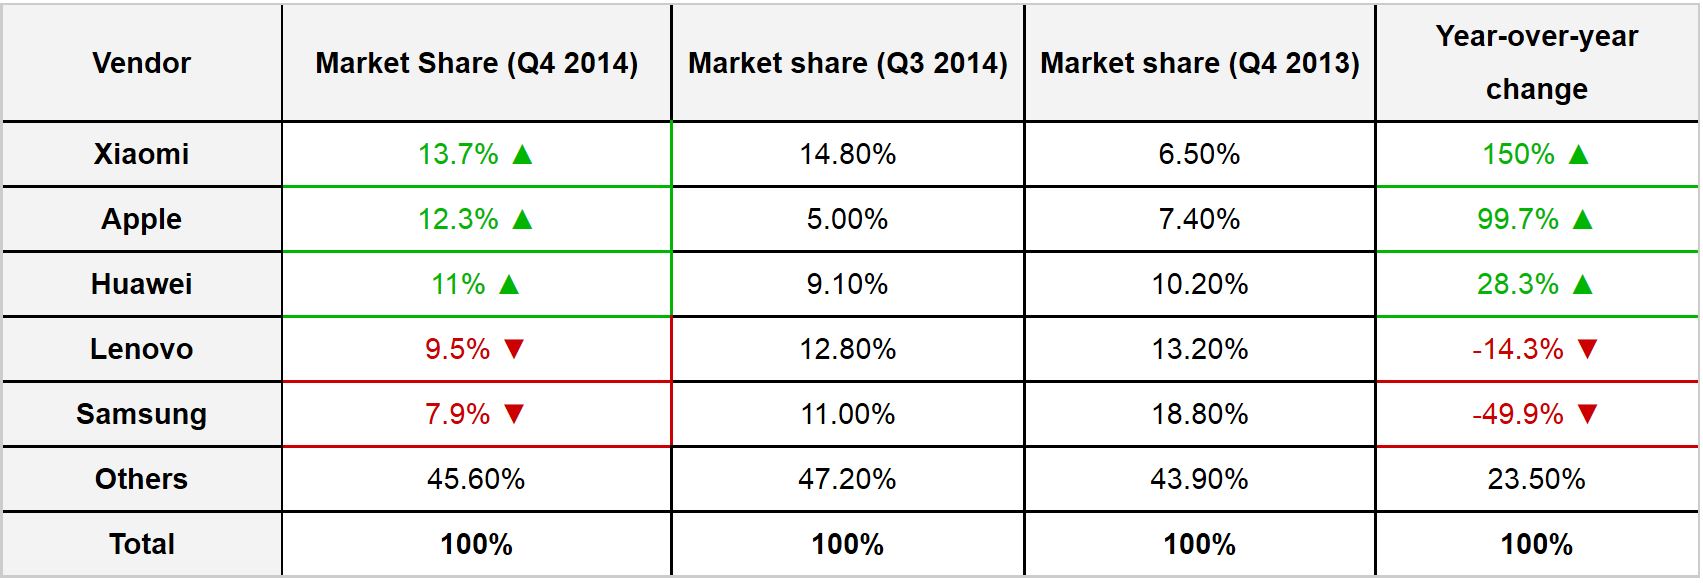 IDC เผยส่วนแบ่งการตลาดของ Samsung ในจีนไตรมาสสุดท้ายปีที่แล้วลดลง Xiaomi ครองอันดับหนึ่ง ตามด้วย Apple